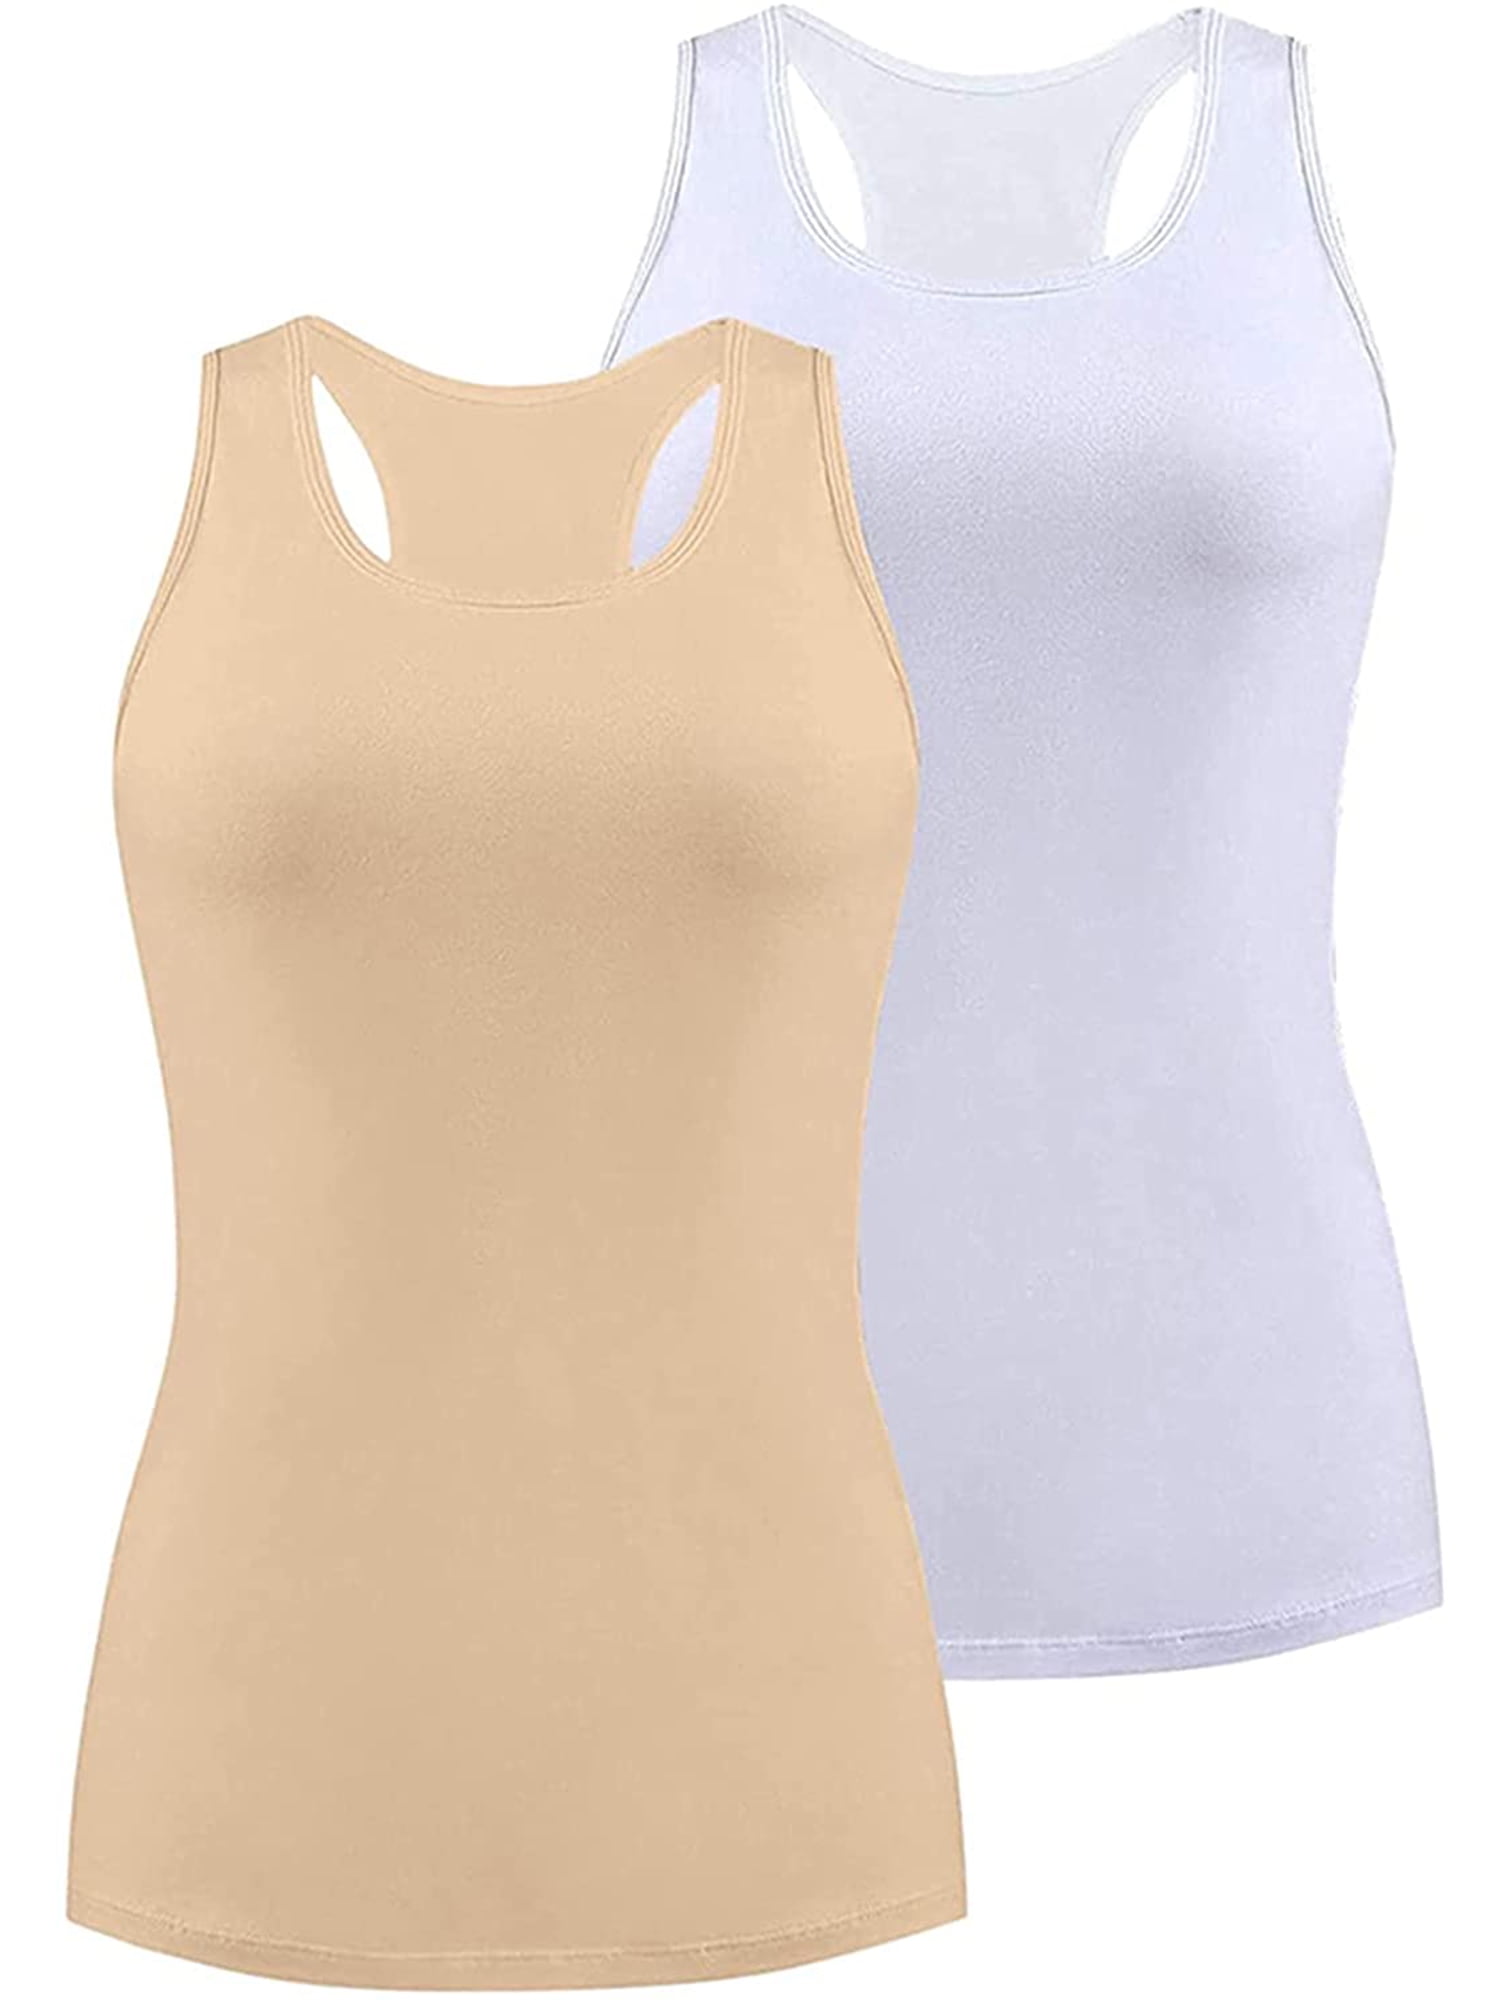 Beautyin Women Tank Top with Shelf Bra Cotton Camisole Undershirt Pack of 2  